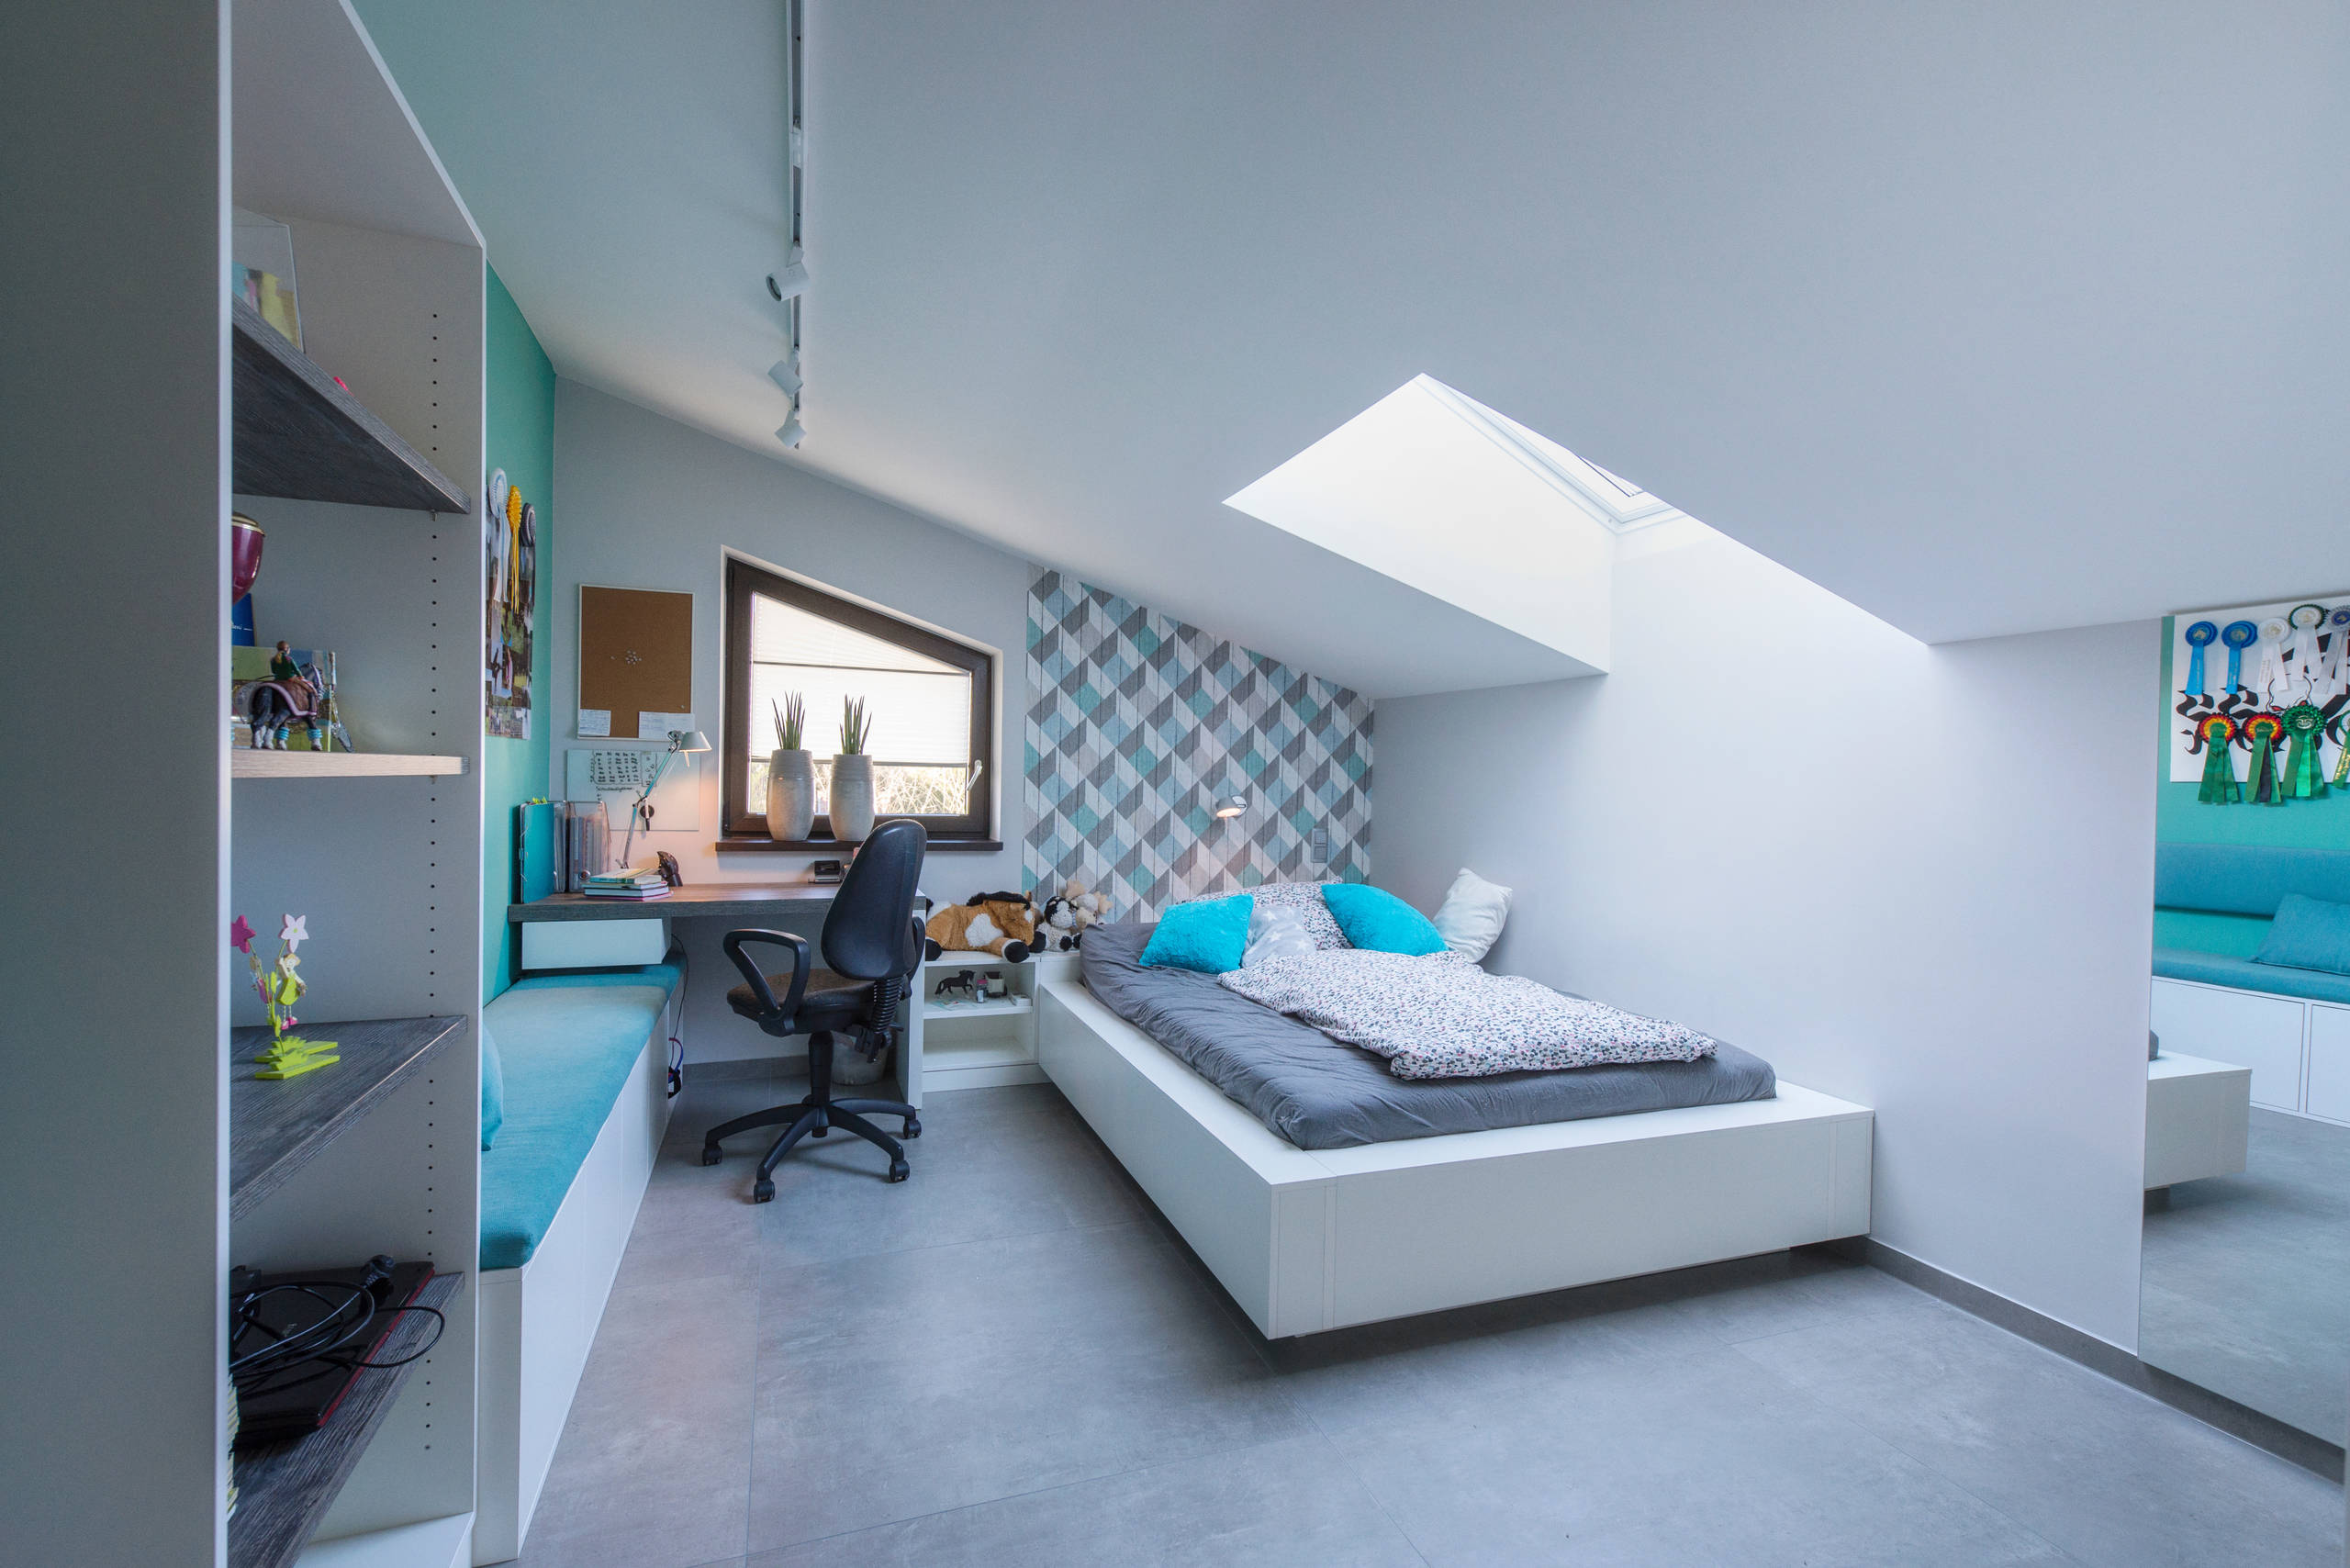 75 Concrete Floor Teen Room Ideas You'll Love - August, 2022 | Houzz